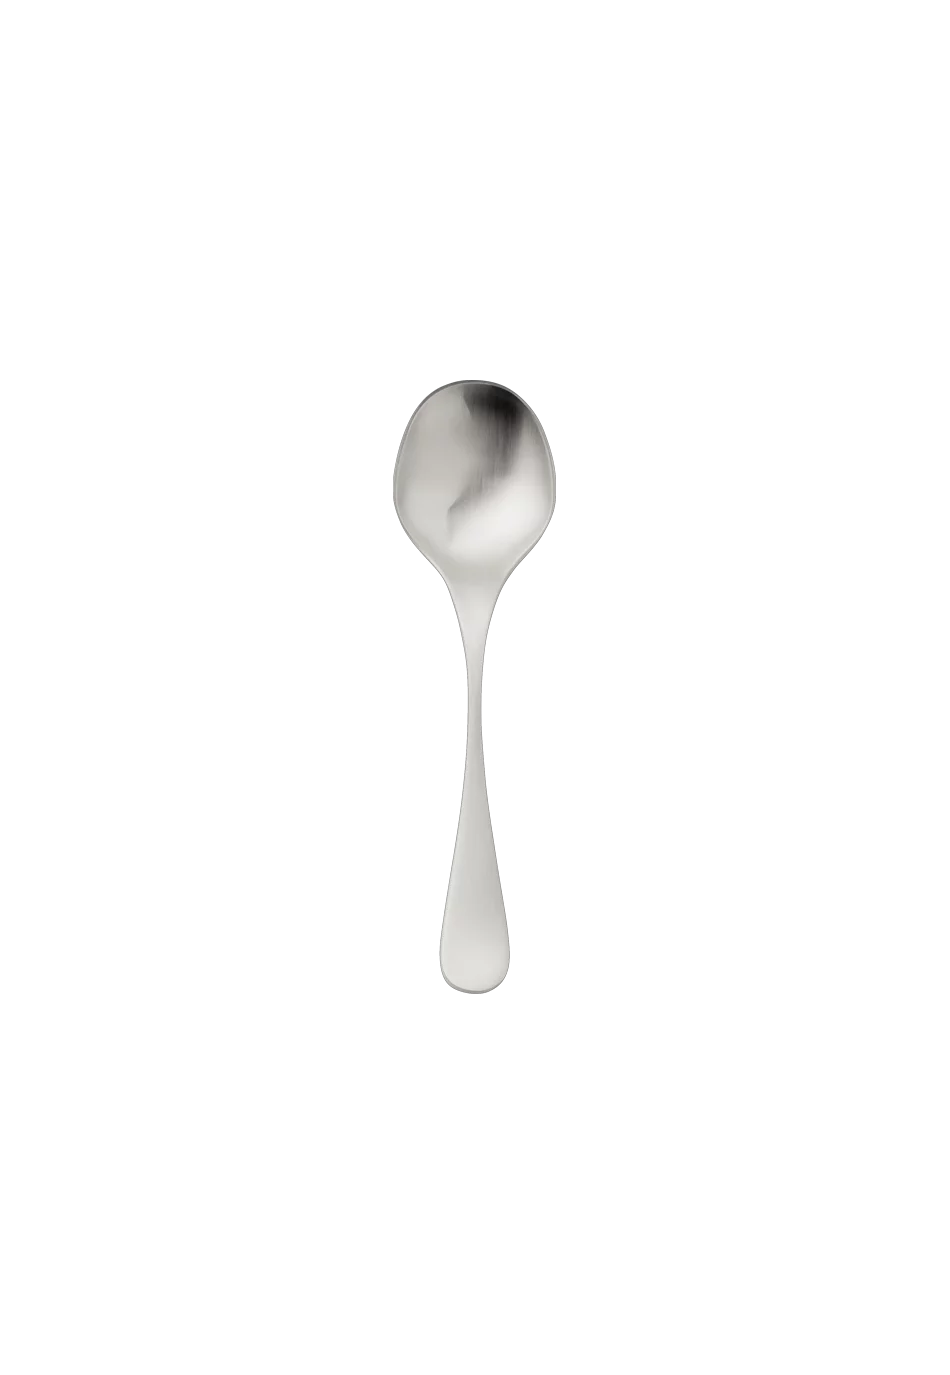 Scandia Sugar Spoon (18/8 stainless steel)